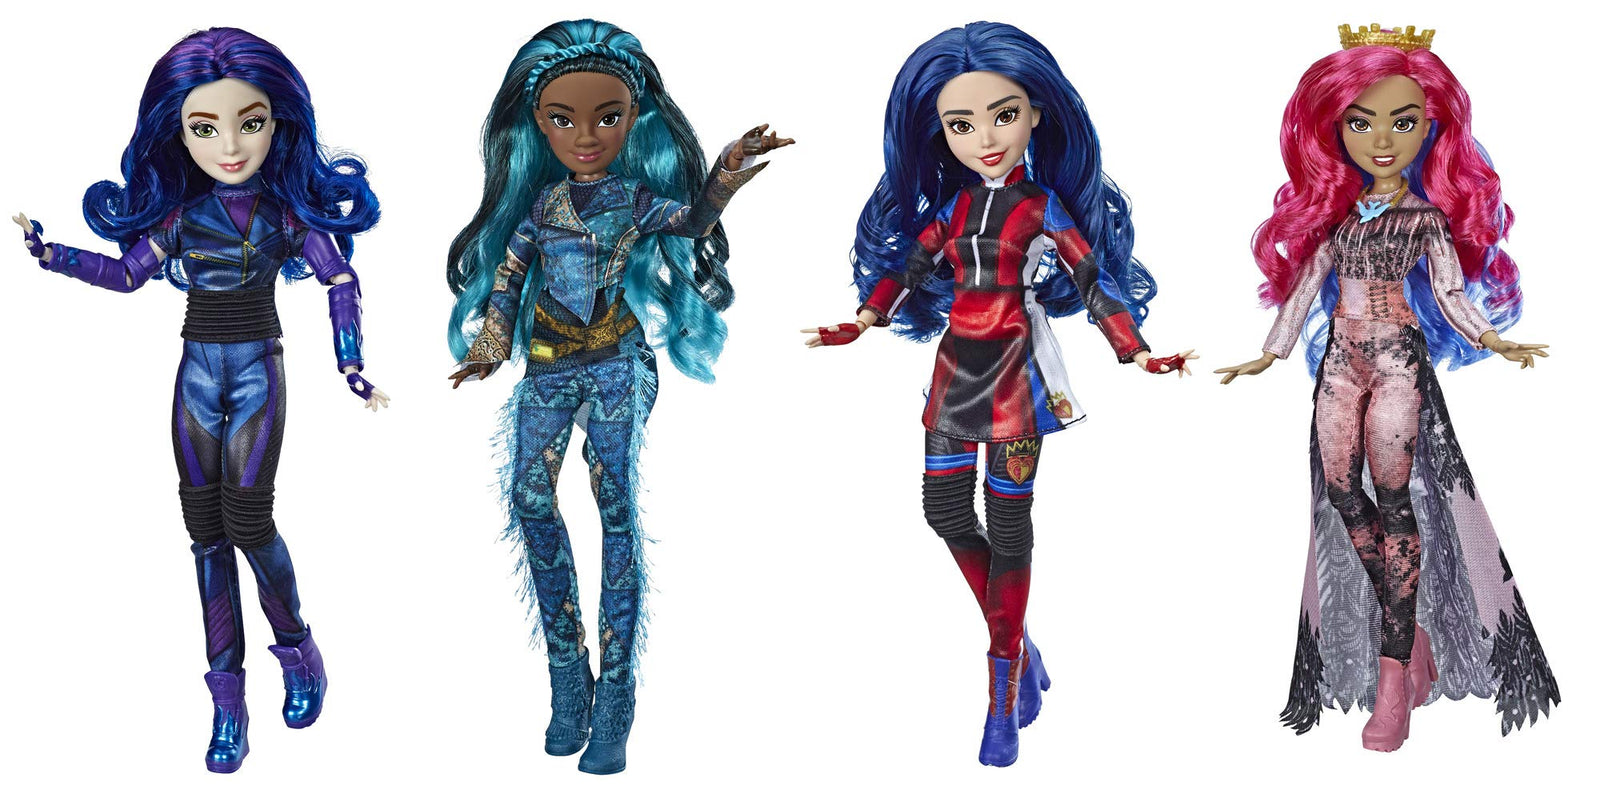 Disney Descendants Uma Fashion Doll, Inspired by Descendants 3, Brown